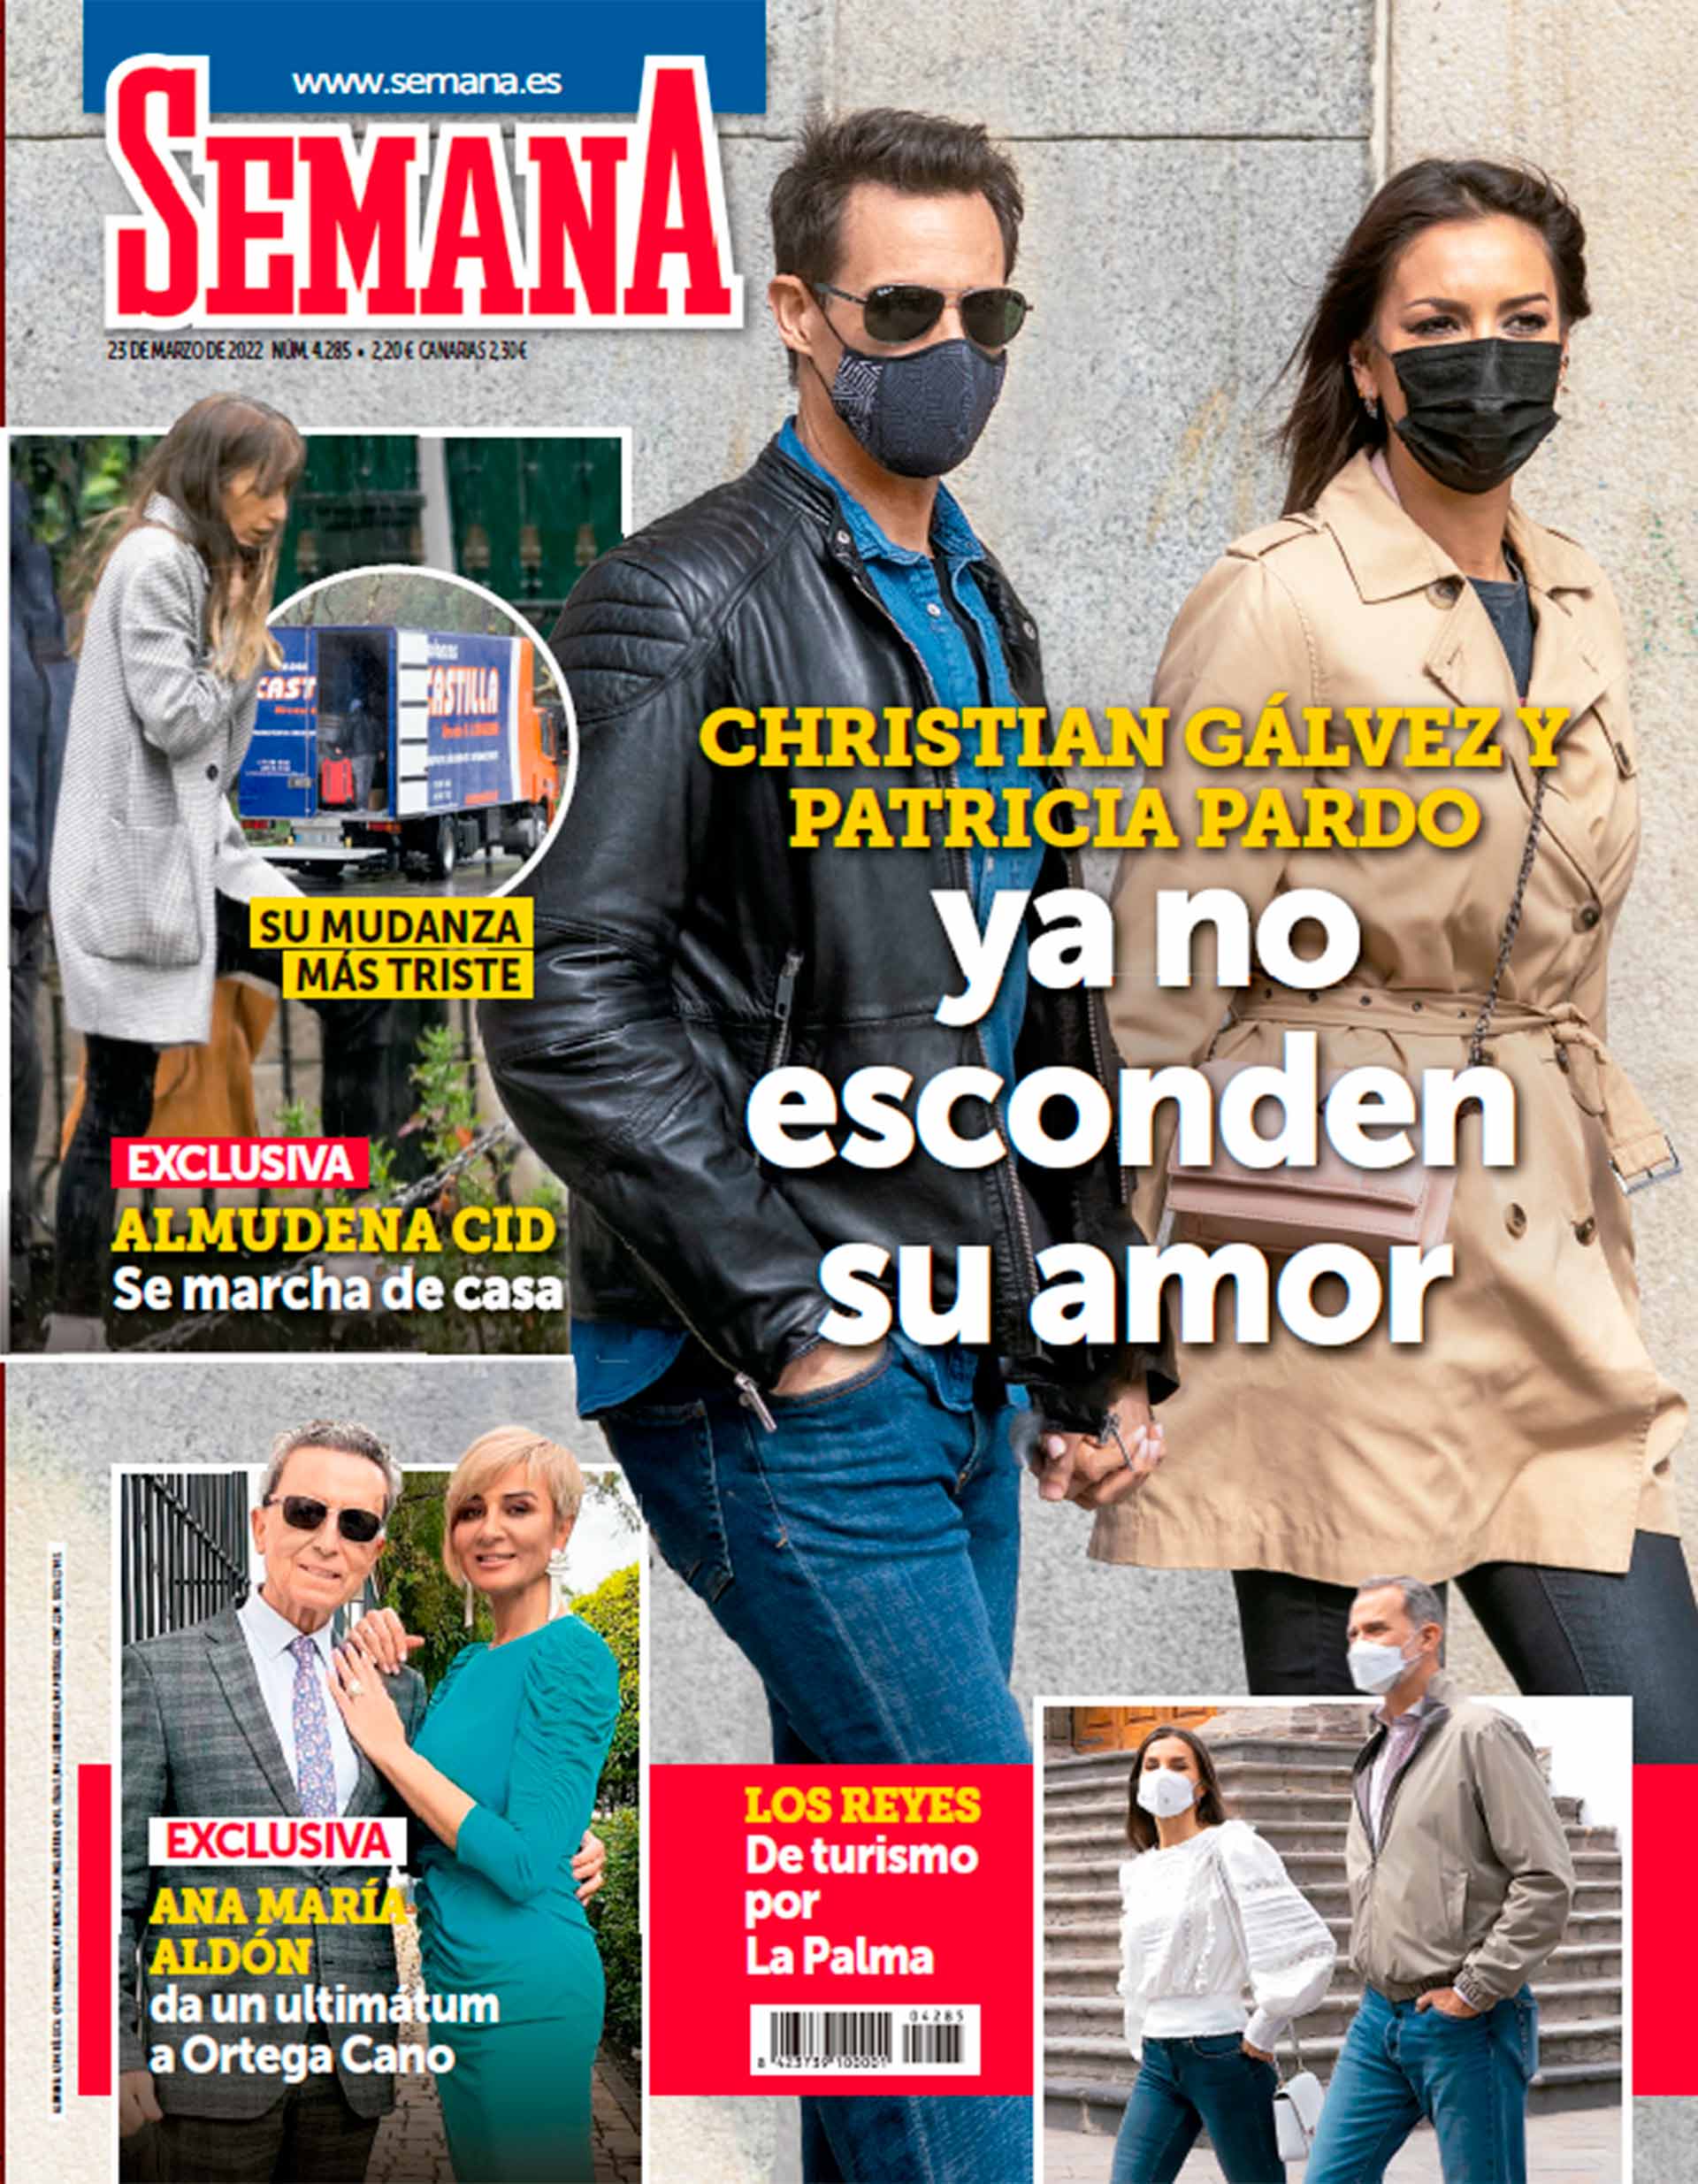 Christian Gálvez y Patricia Pardo portada SEMANA